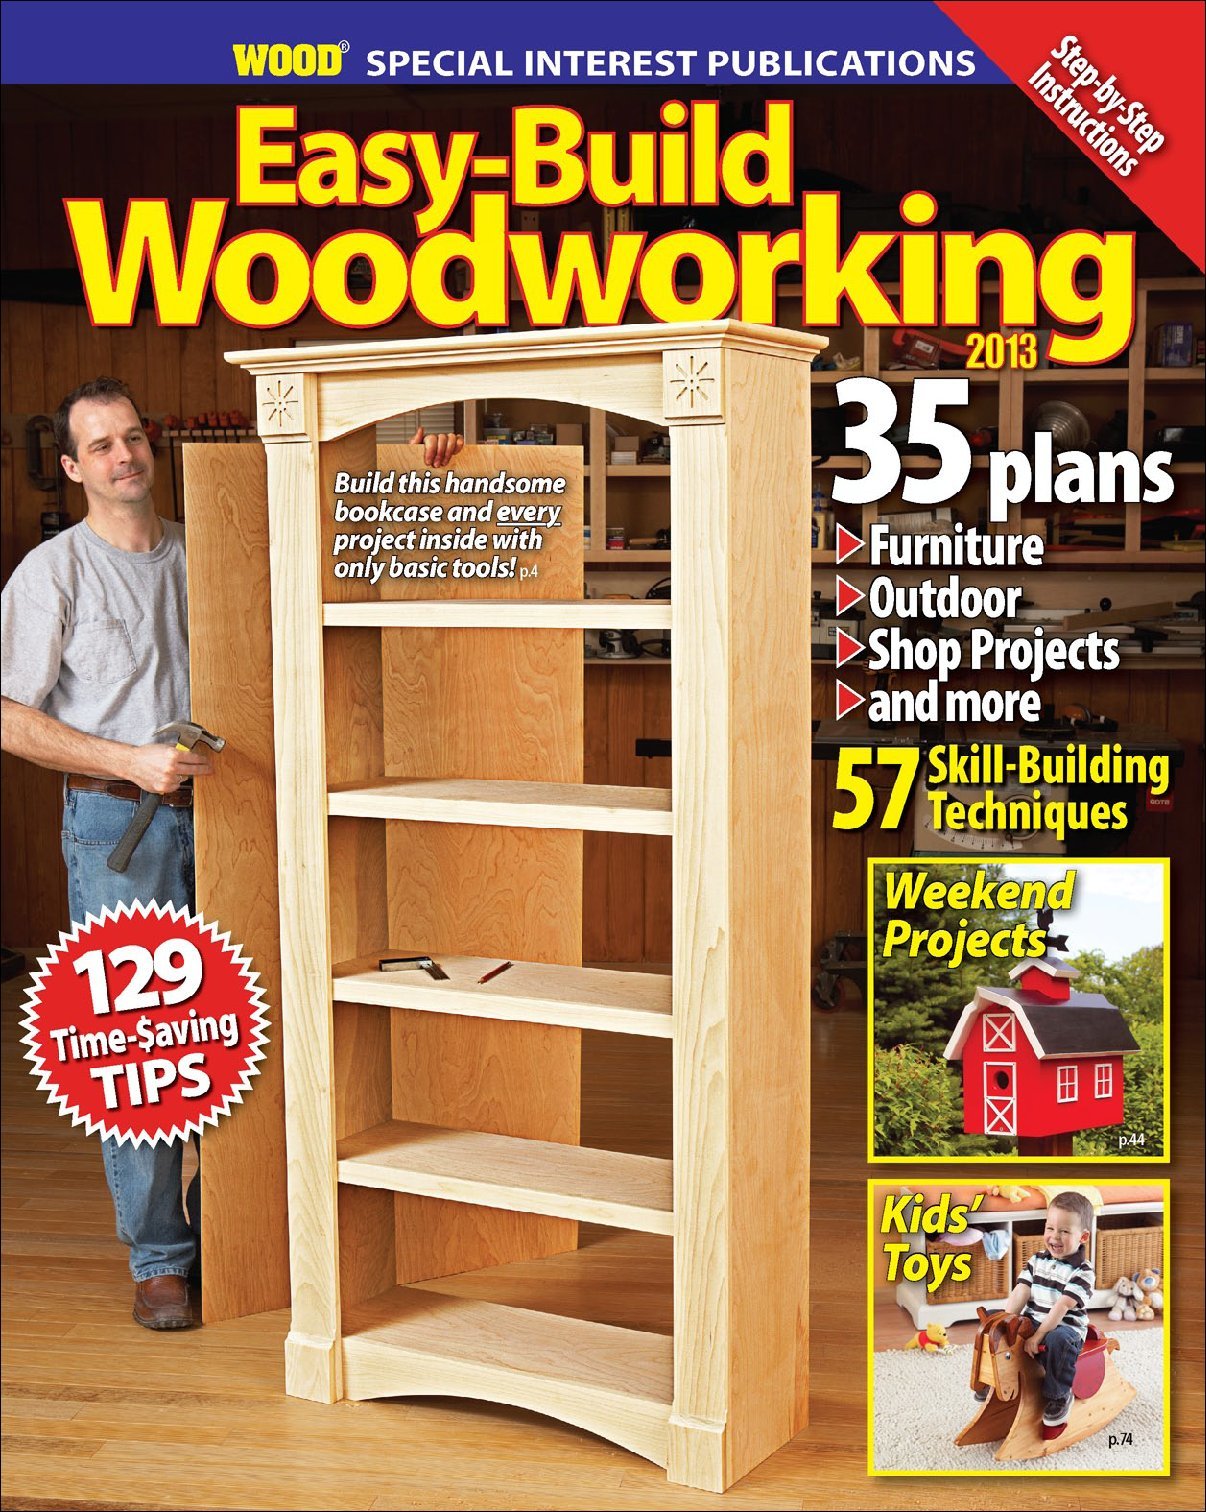 Woodworking magazine to Main Image